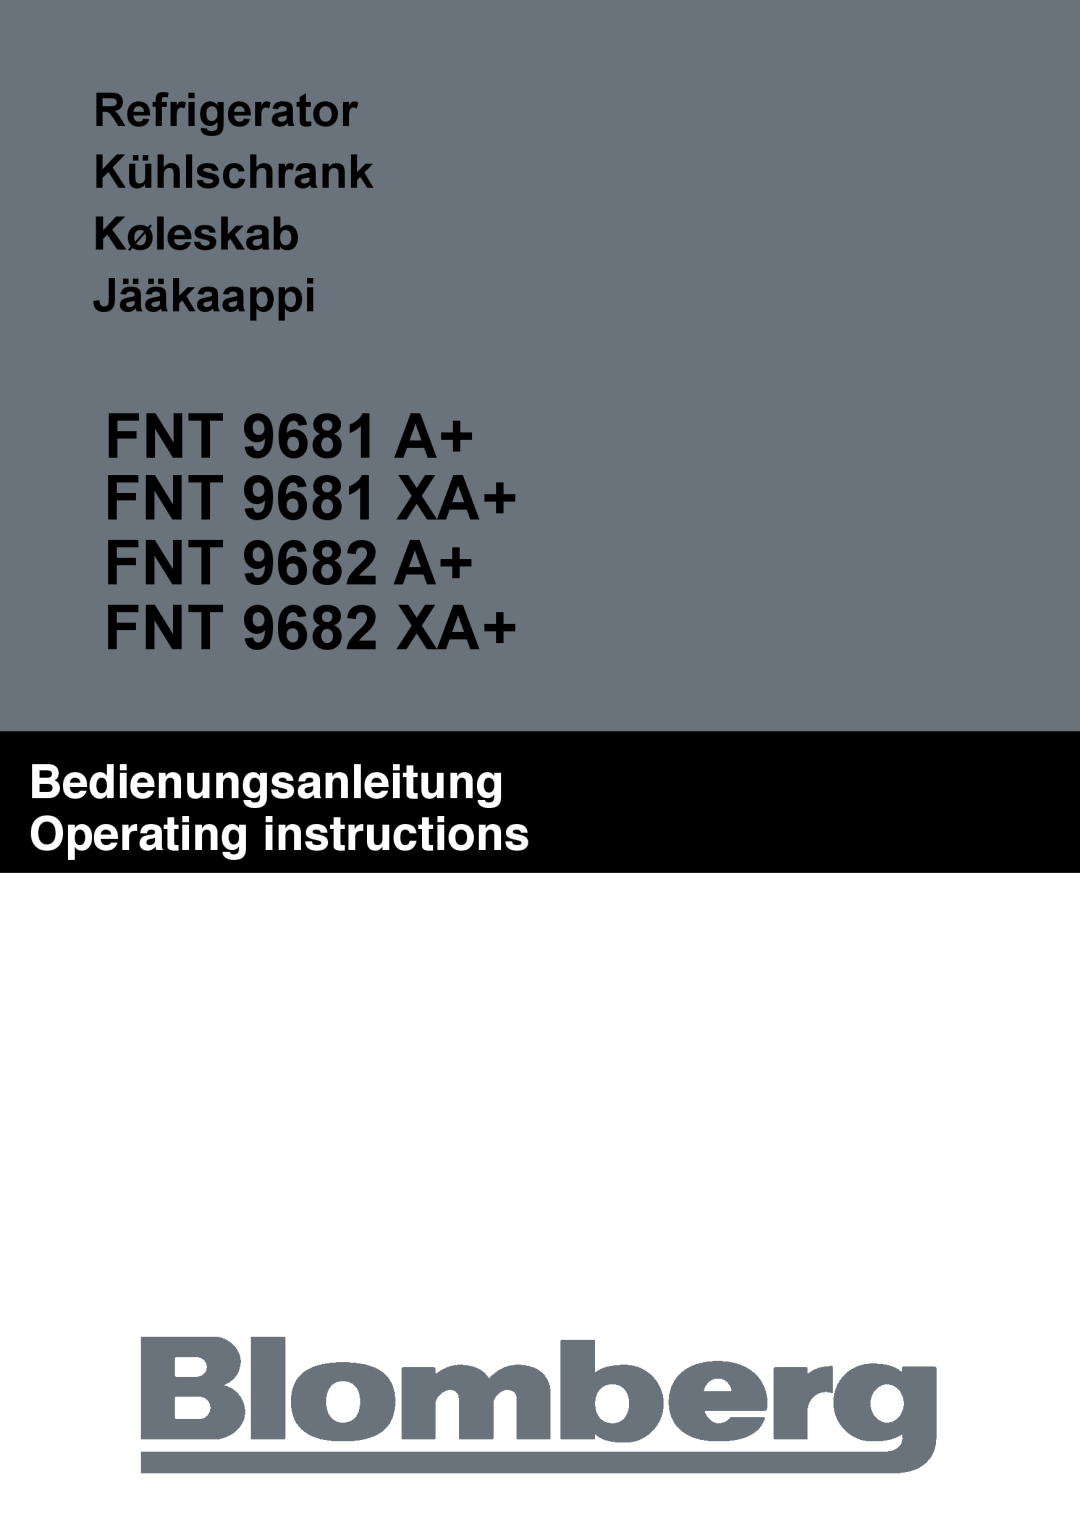 Blomberg manual FNT 9681 A+ FNT 9681 XA+ FNT 9682 A+ FNT 9682 XA+, Refrigerator Kühlschrank Køleskab Jääkaappi 